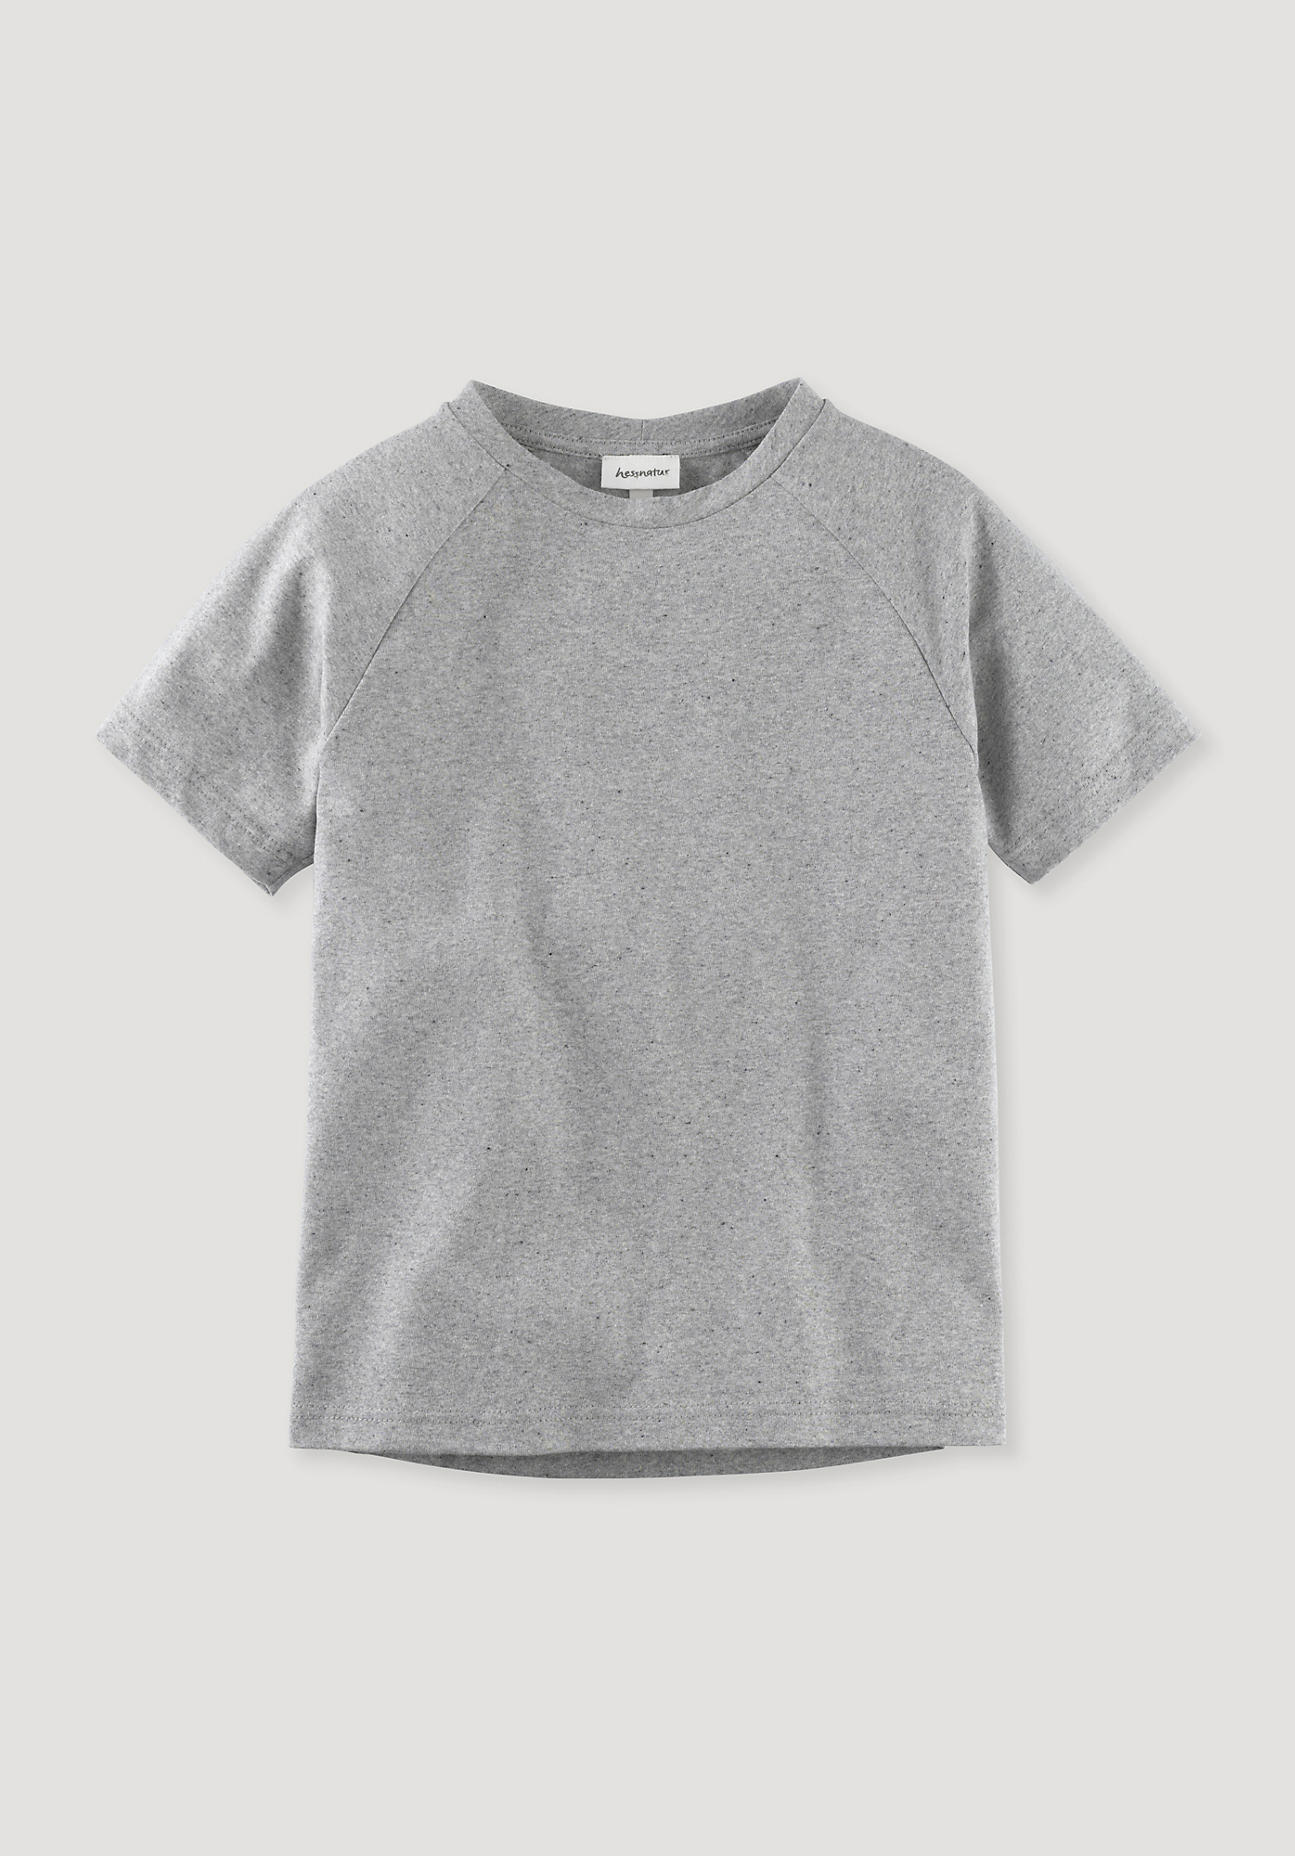 hessnatur Kinder BetterRecycling Shirt aus Bio-Baumwolle - grau Größe 158/164